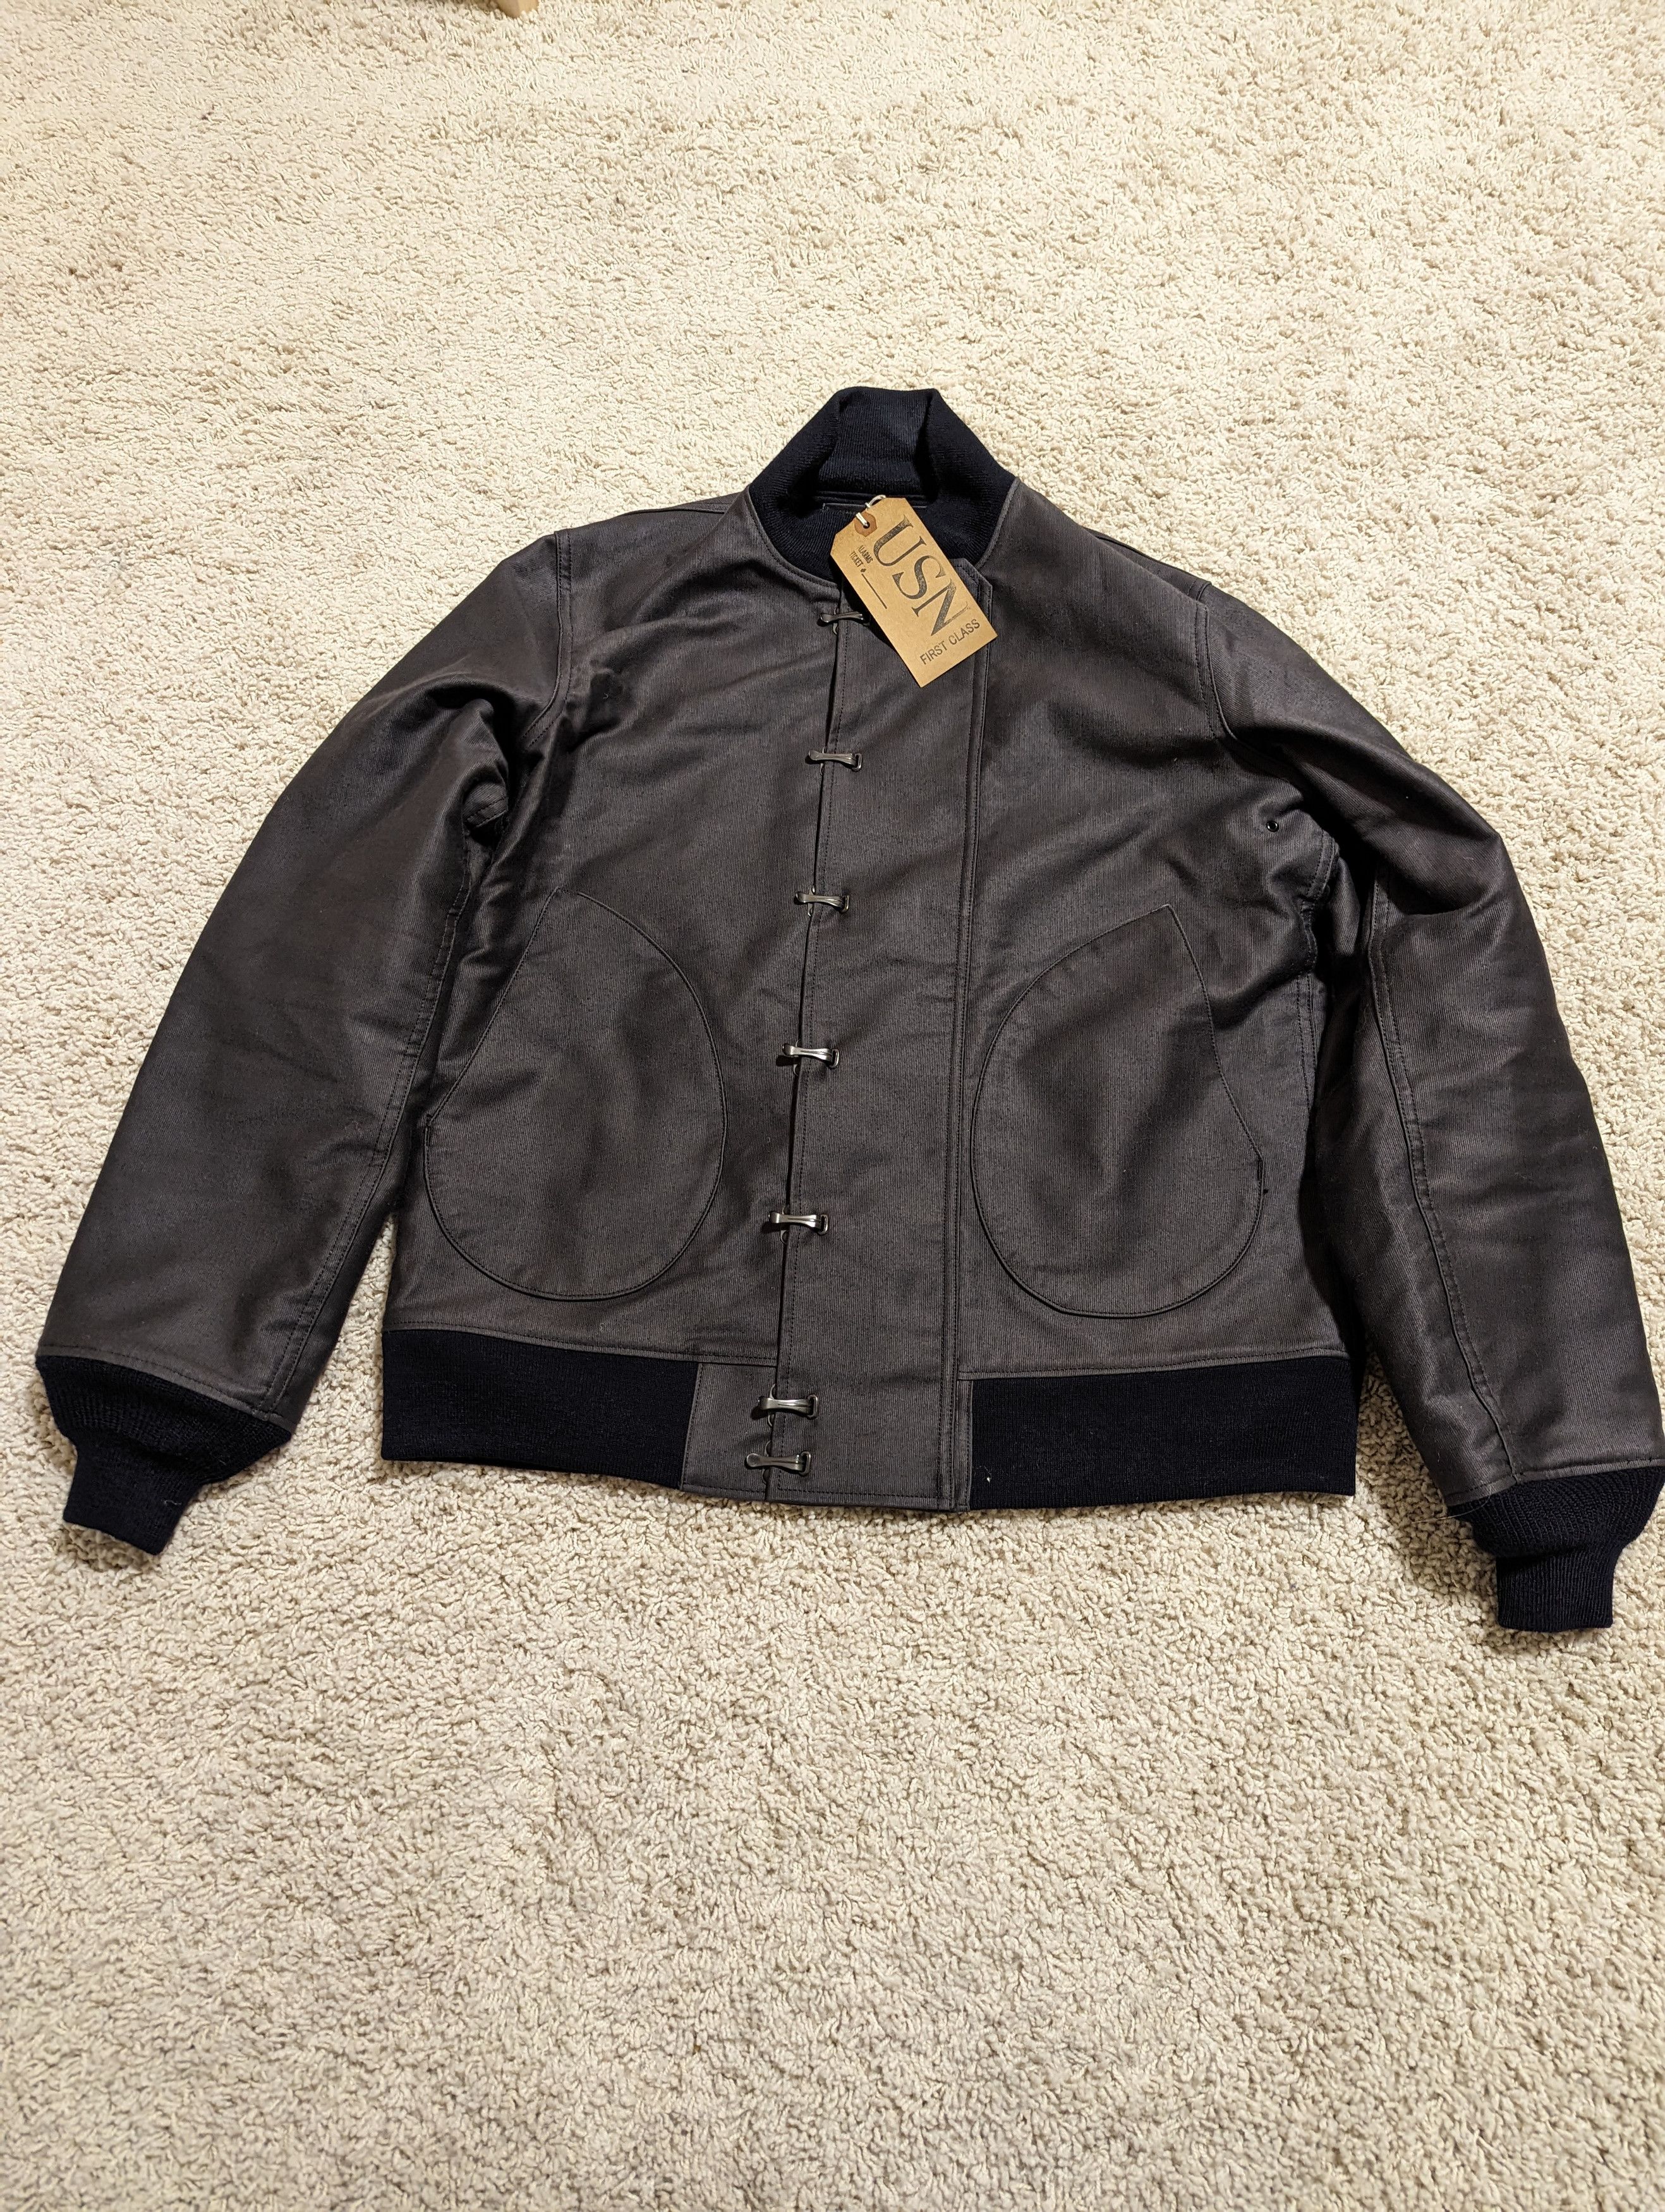 Warehouse Lot 2182 N-1 winter jacket 7-hook front navy blue | Grailed